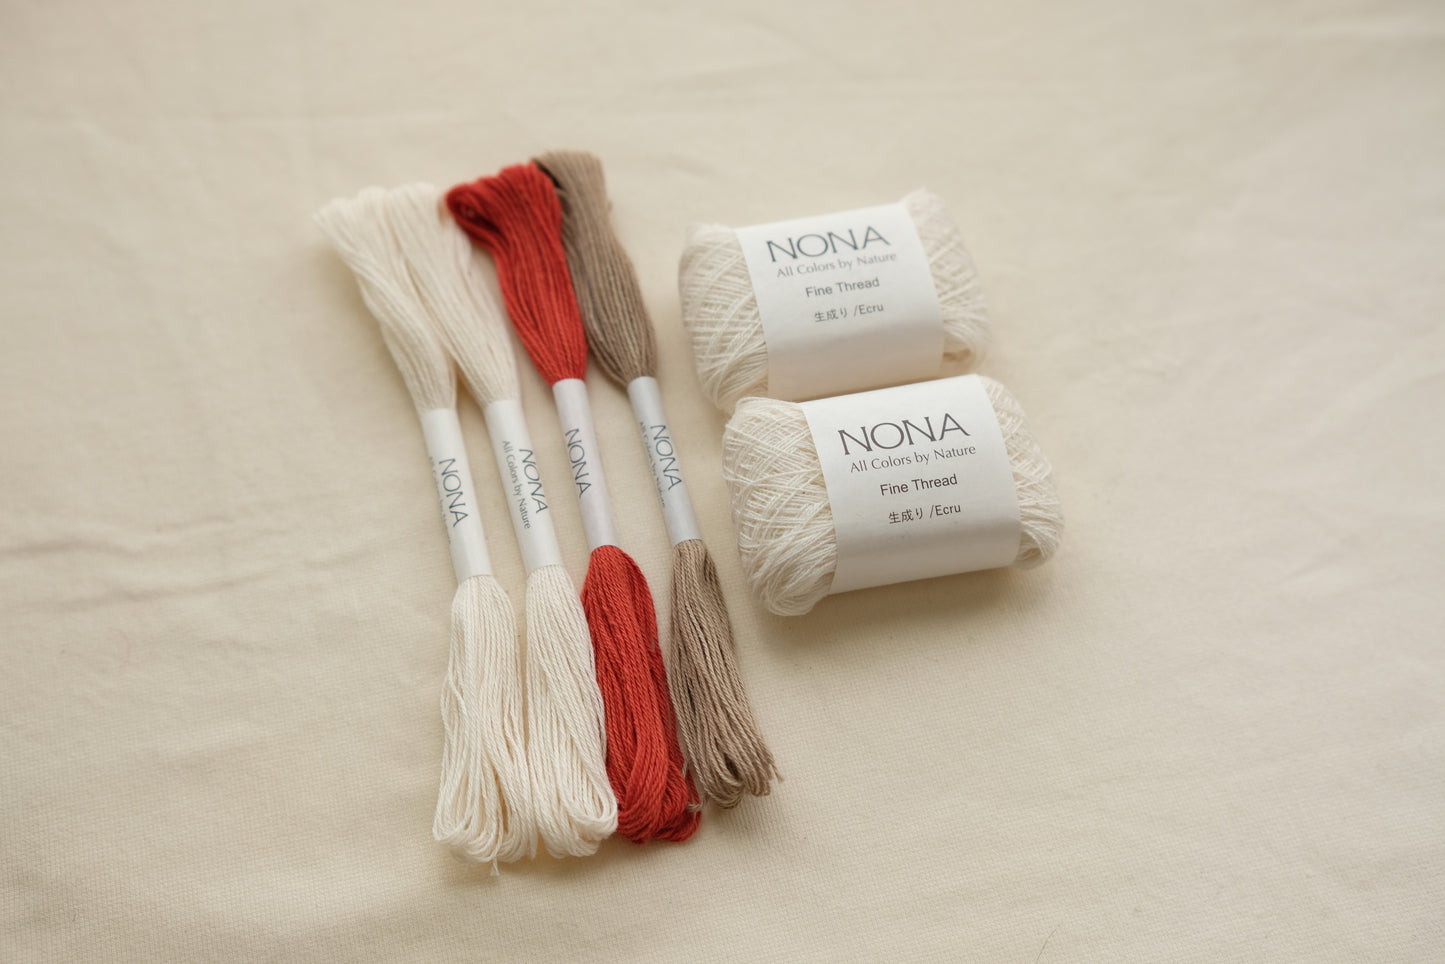 NONA Crane Thread Kit